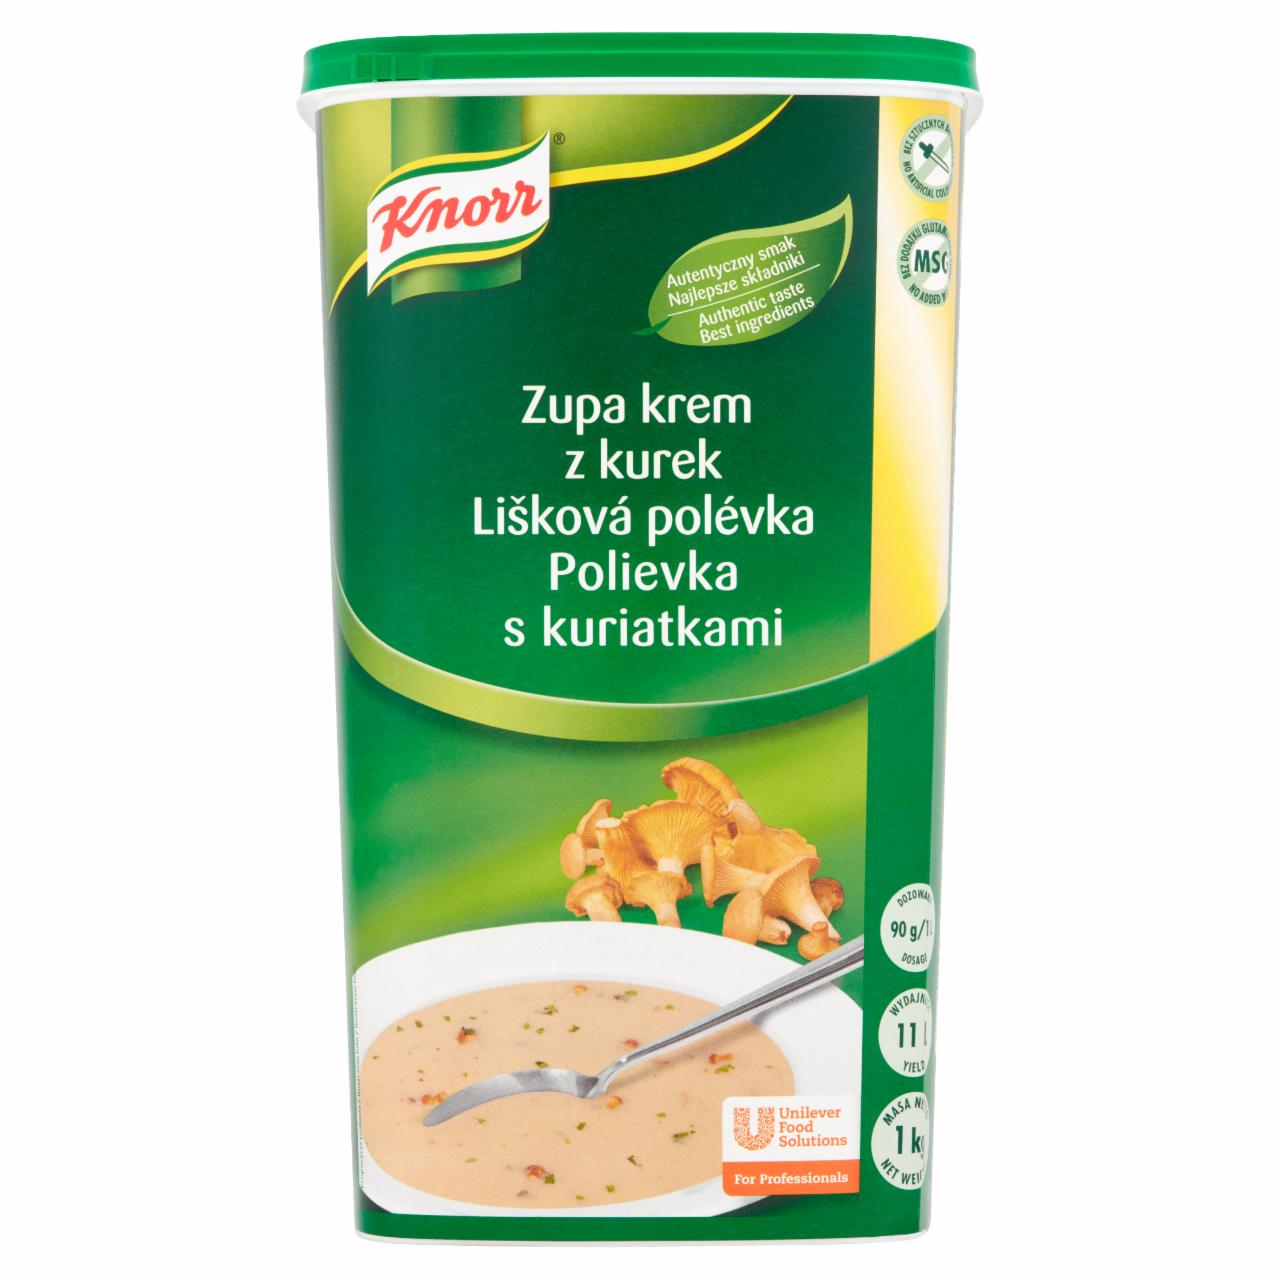 Zdjęcia - Knorr Zupa krem z kurek 1 kg